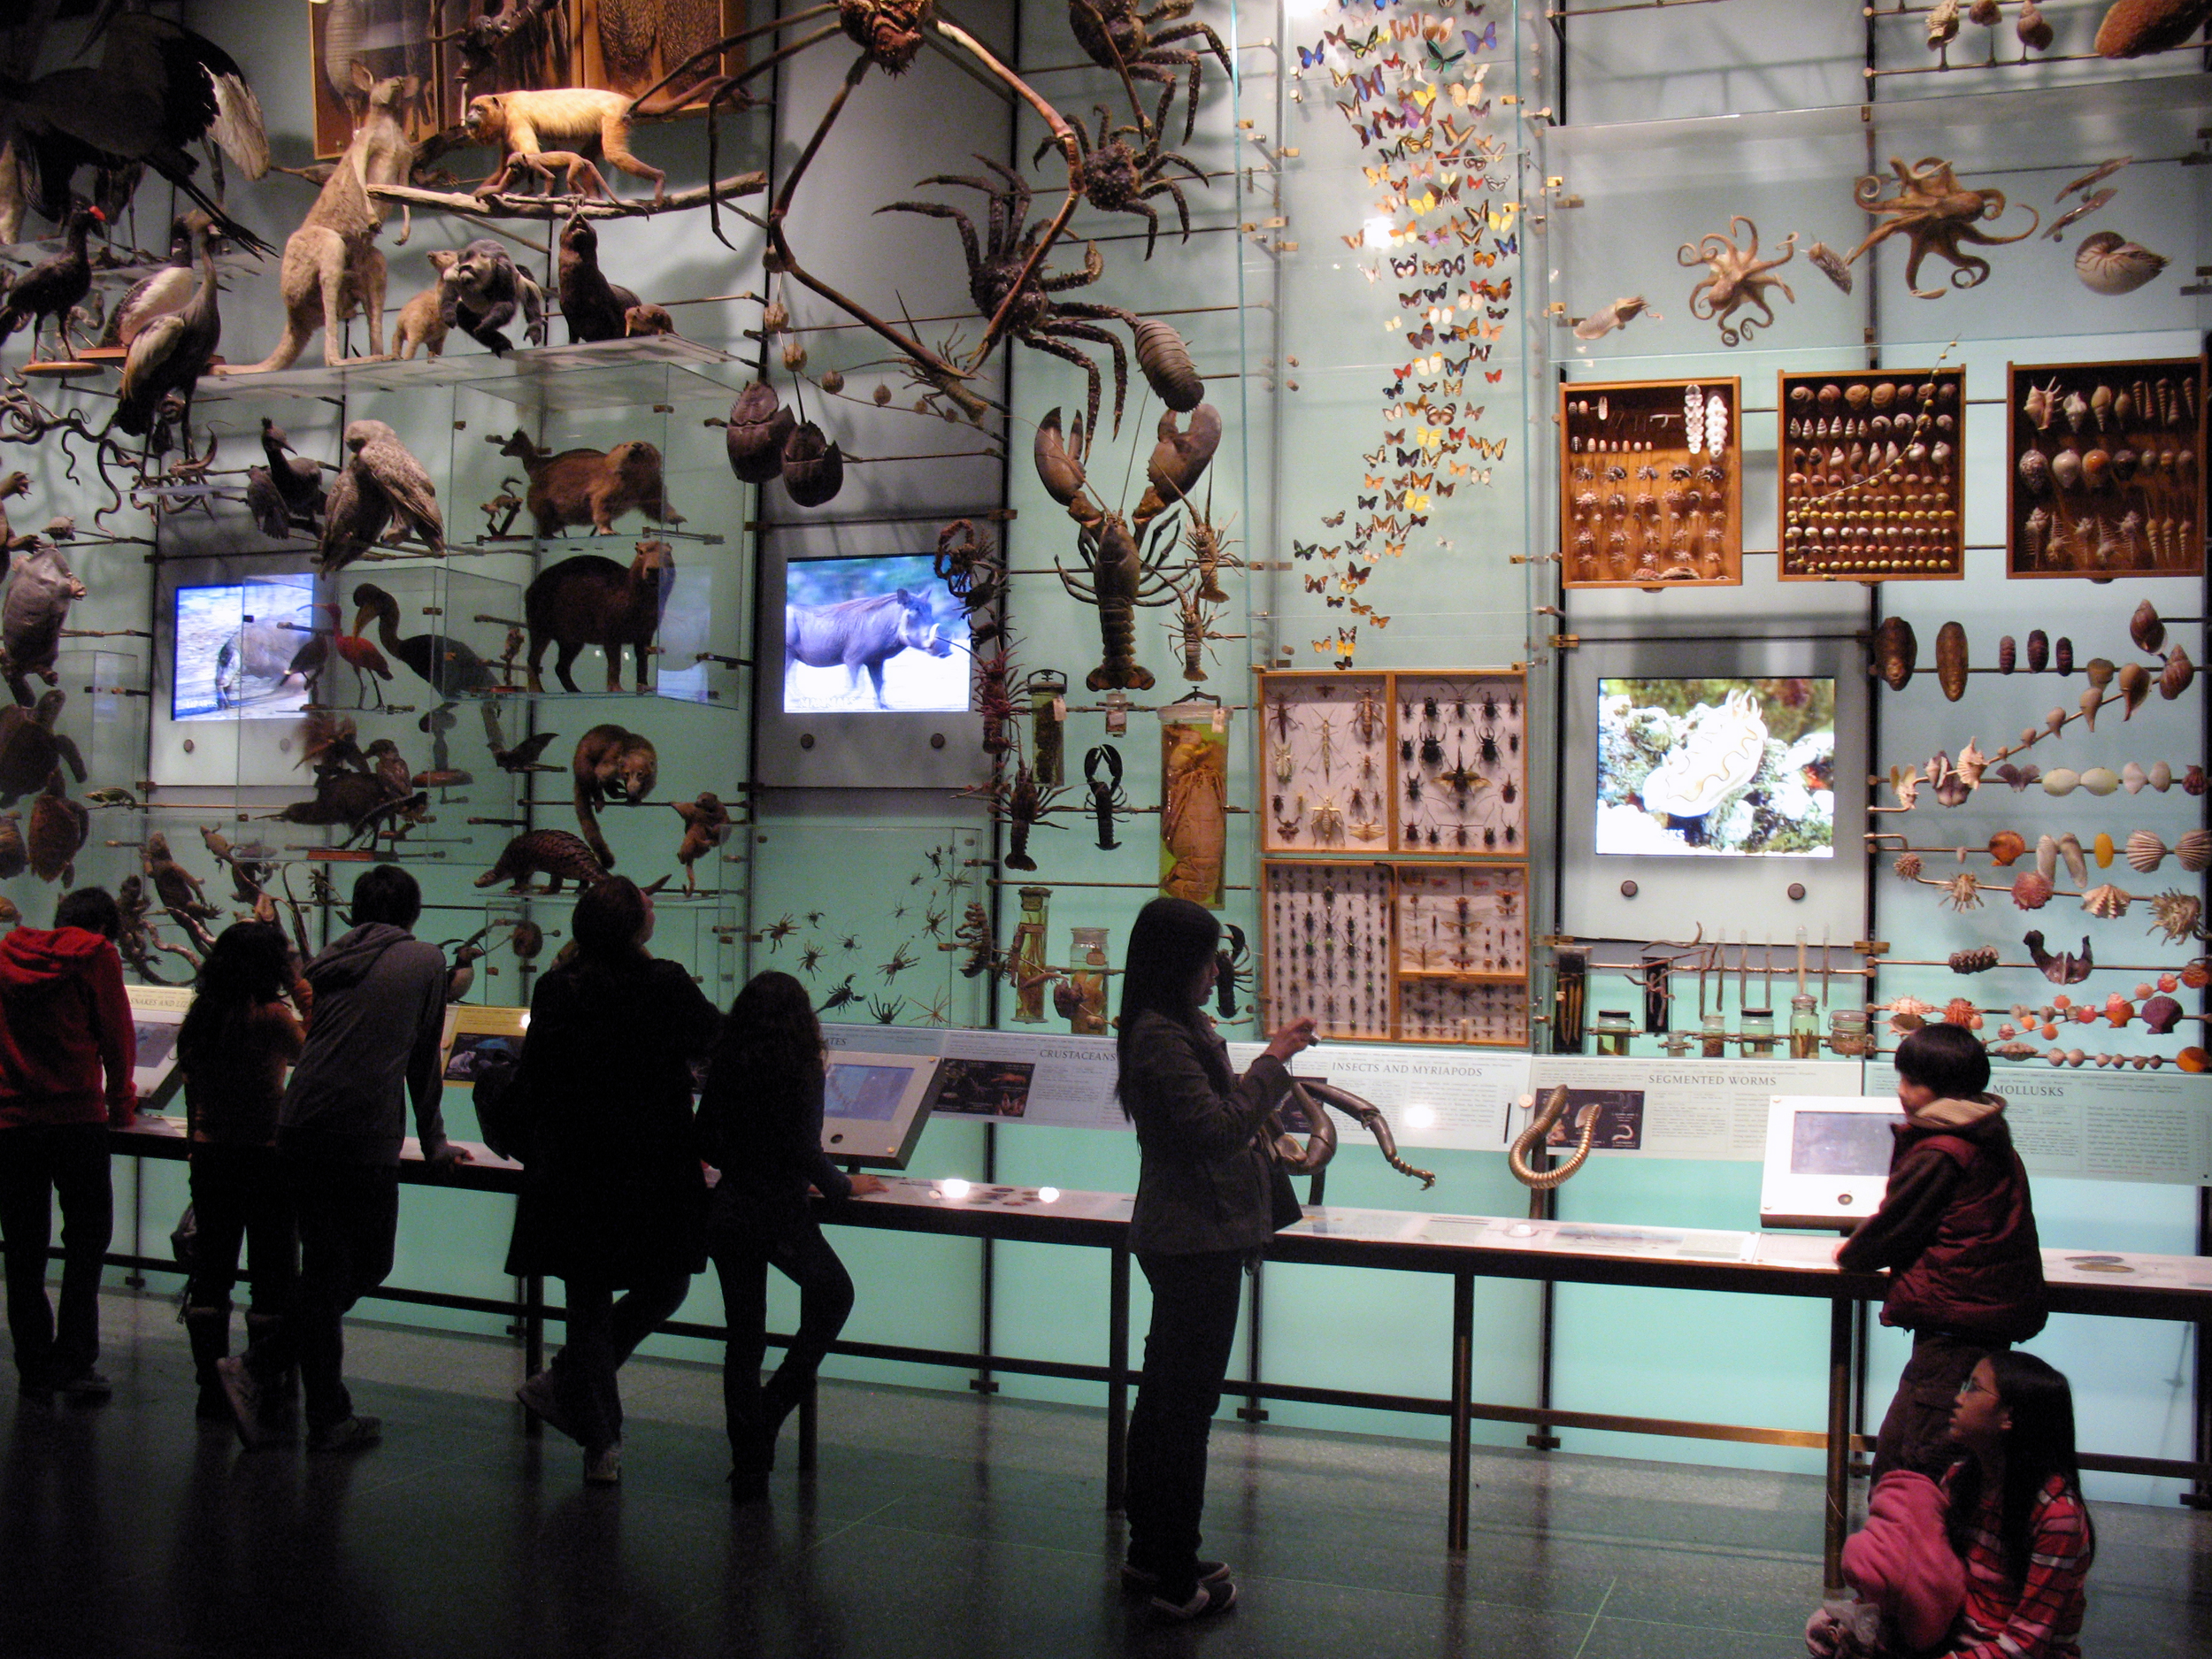 American_Museum_of_Natural_History_Biodiversity_Hall_anagoria.JPG